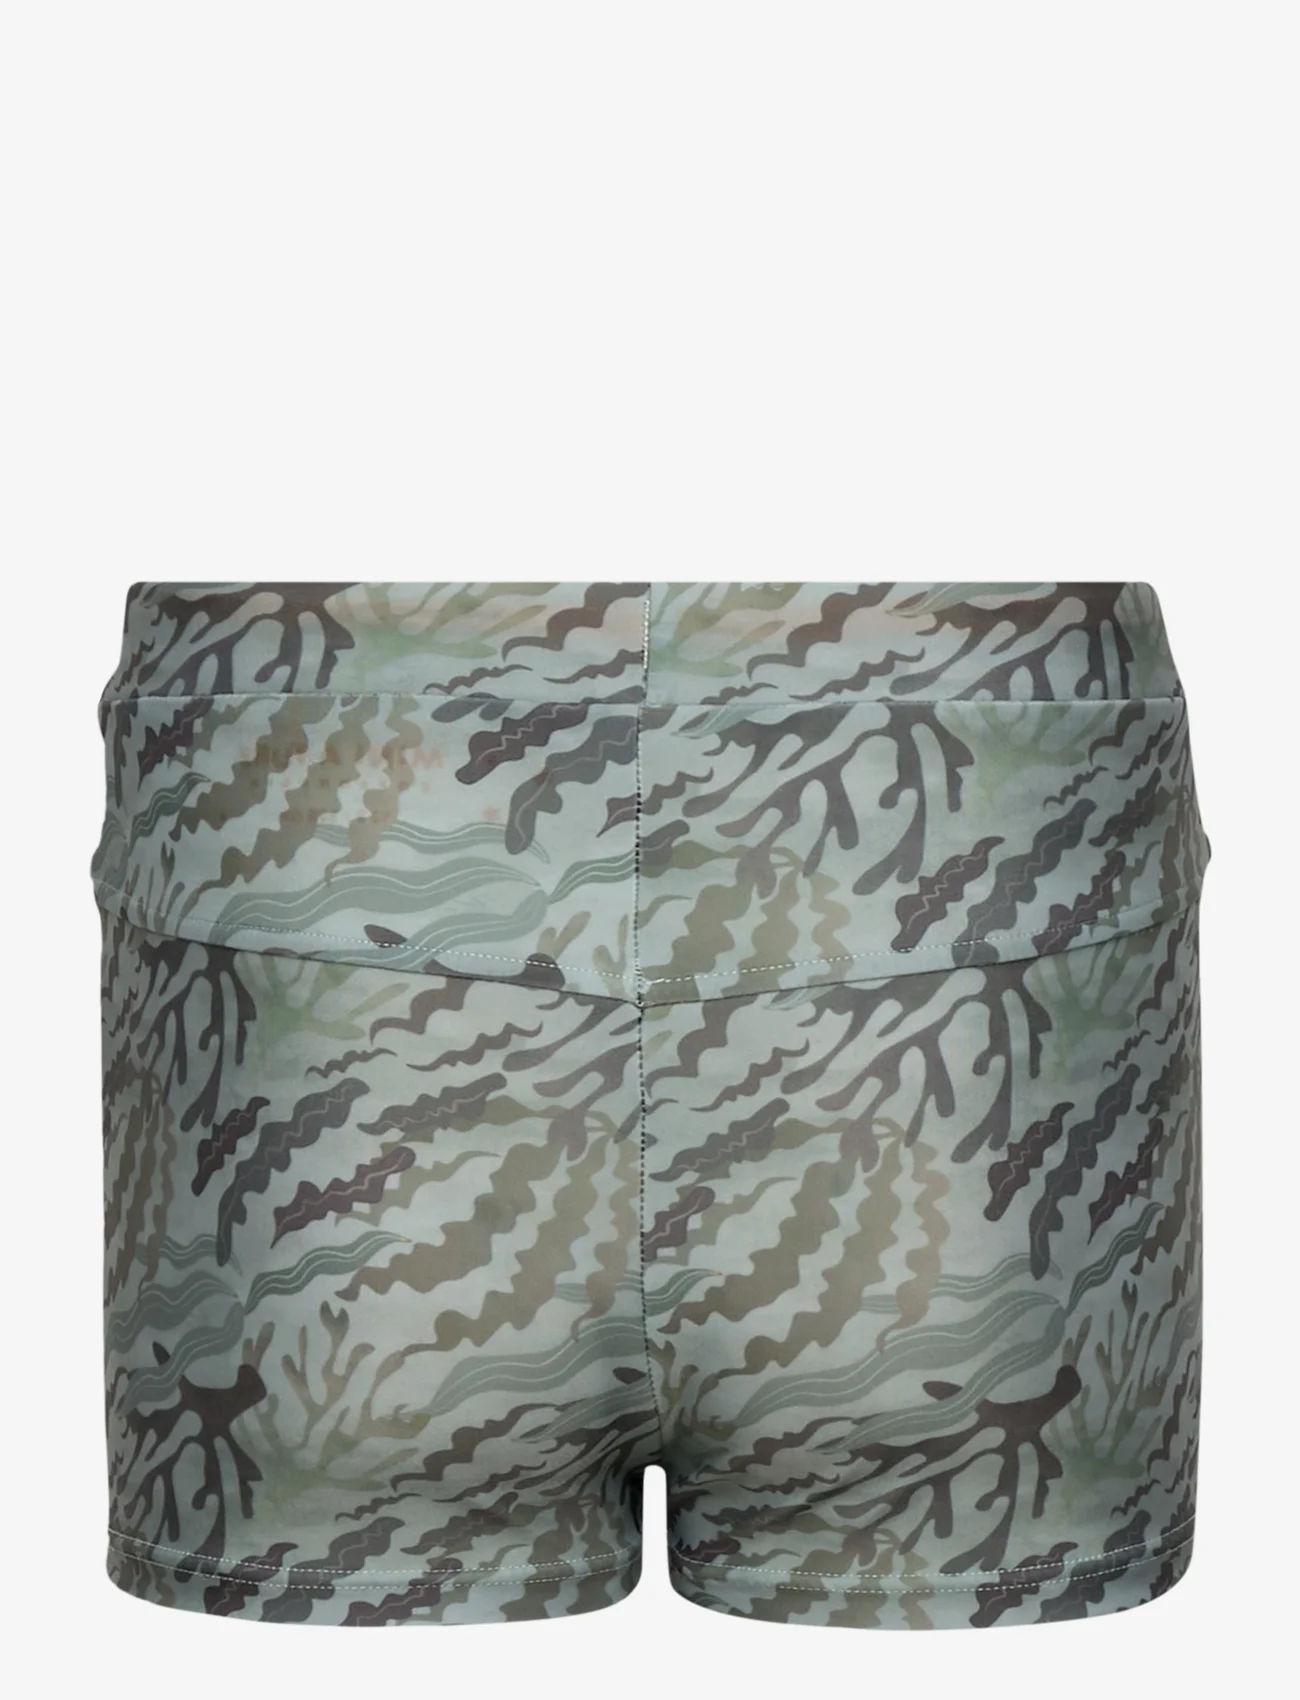 Mini A Ture - Gerryan printed swim shorts - uimashortsit - print sea weed camo - 1